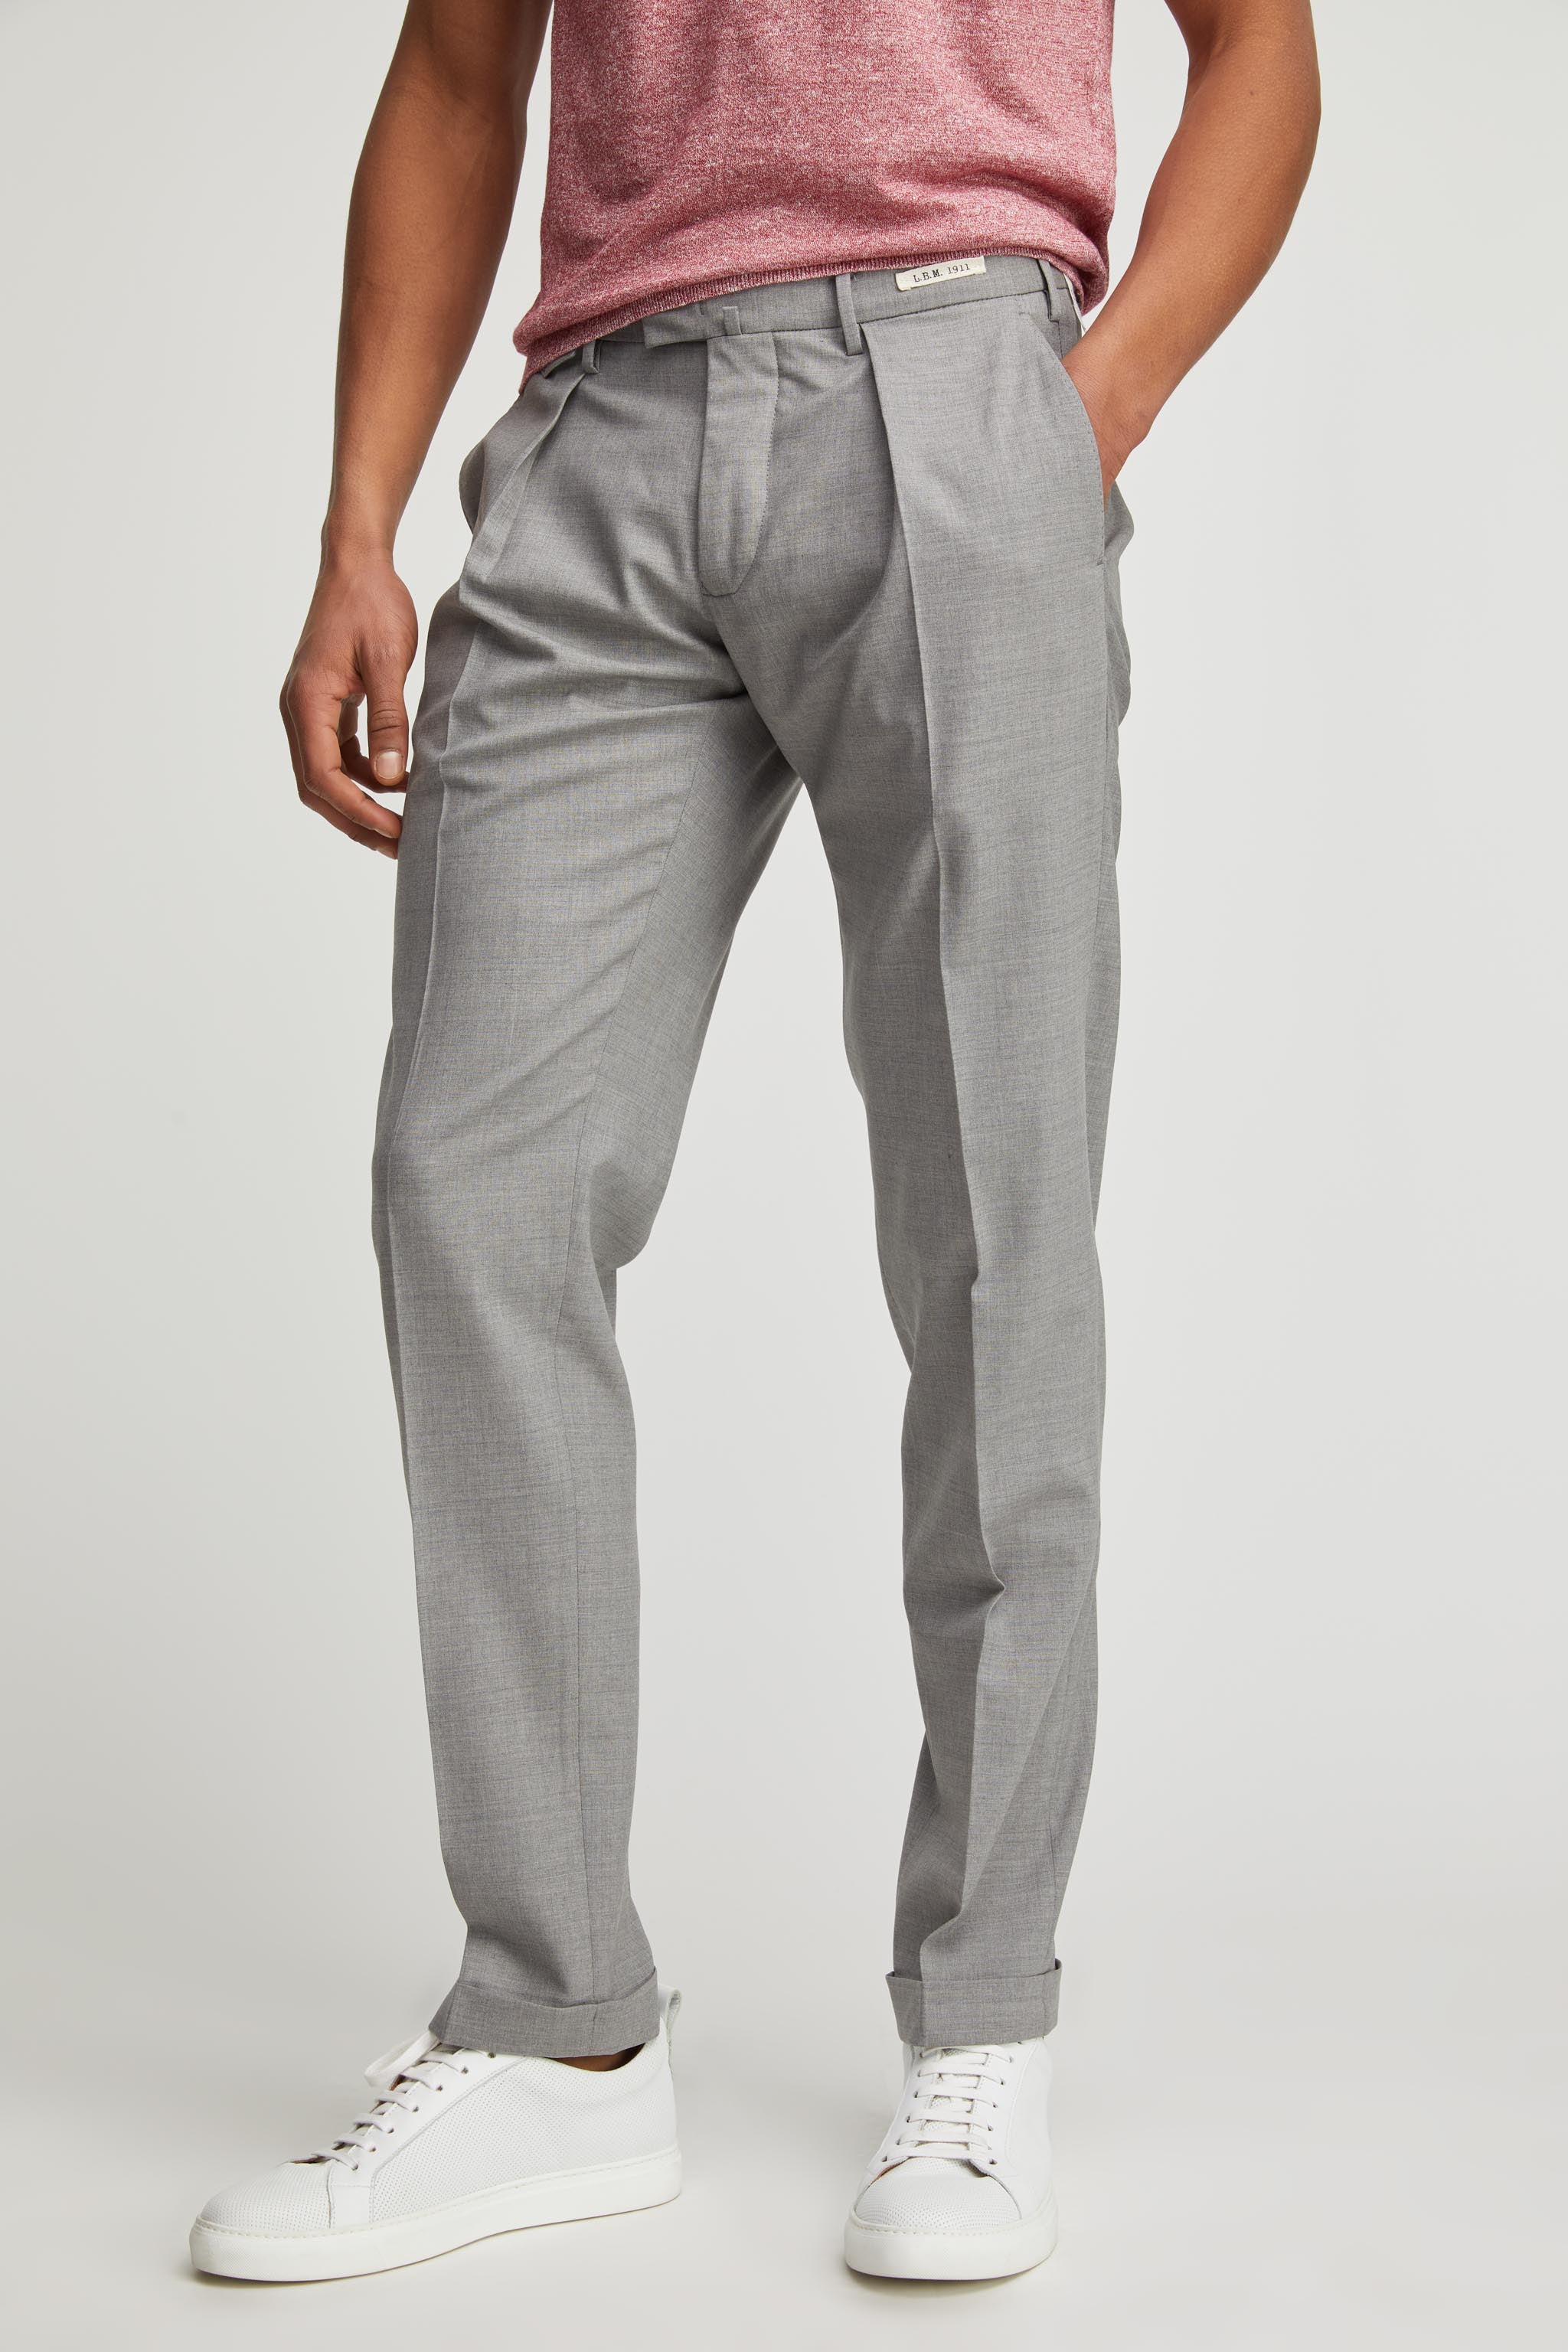 PHIL pants in light grey